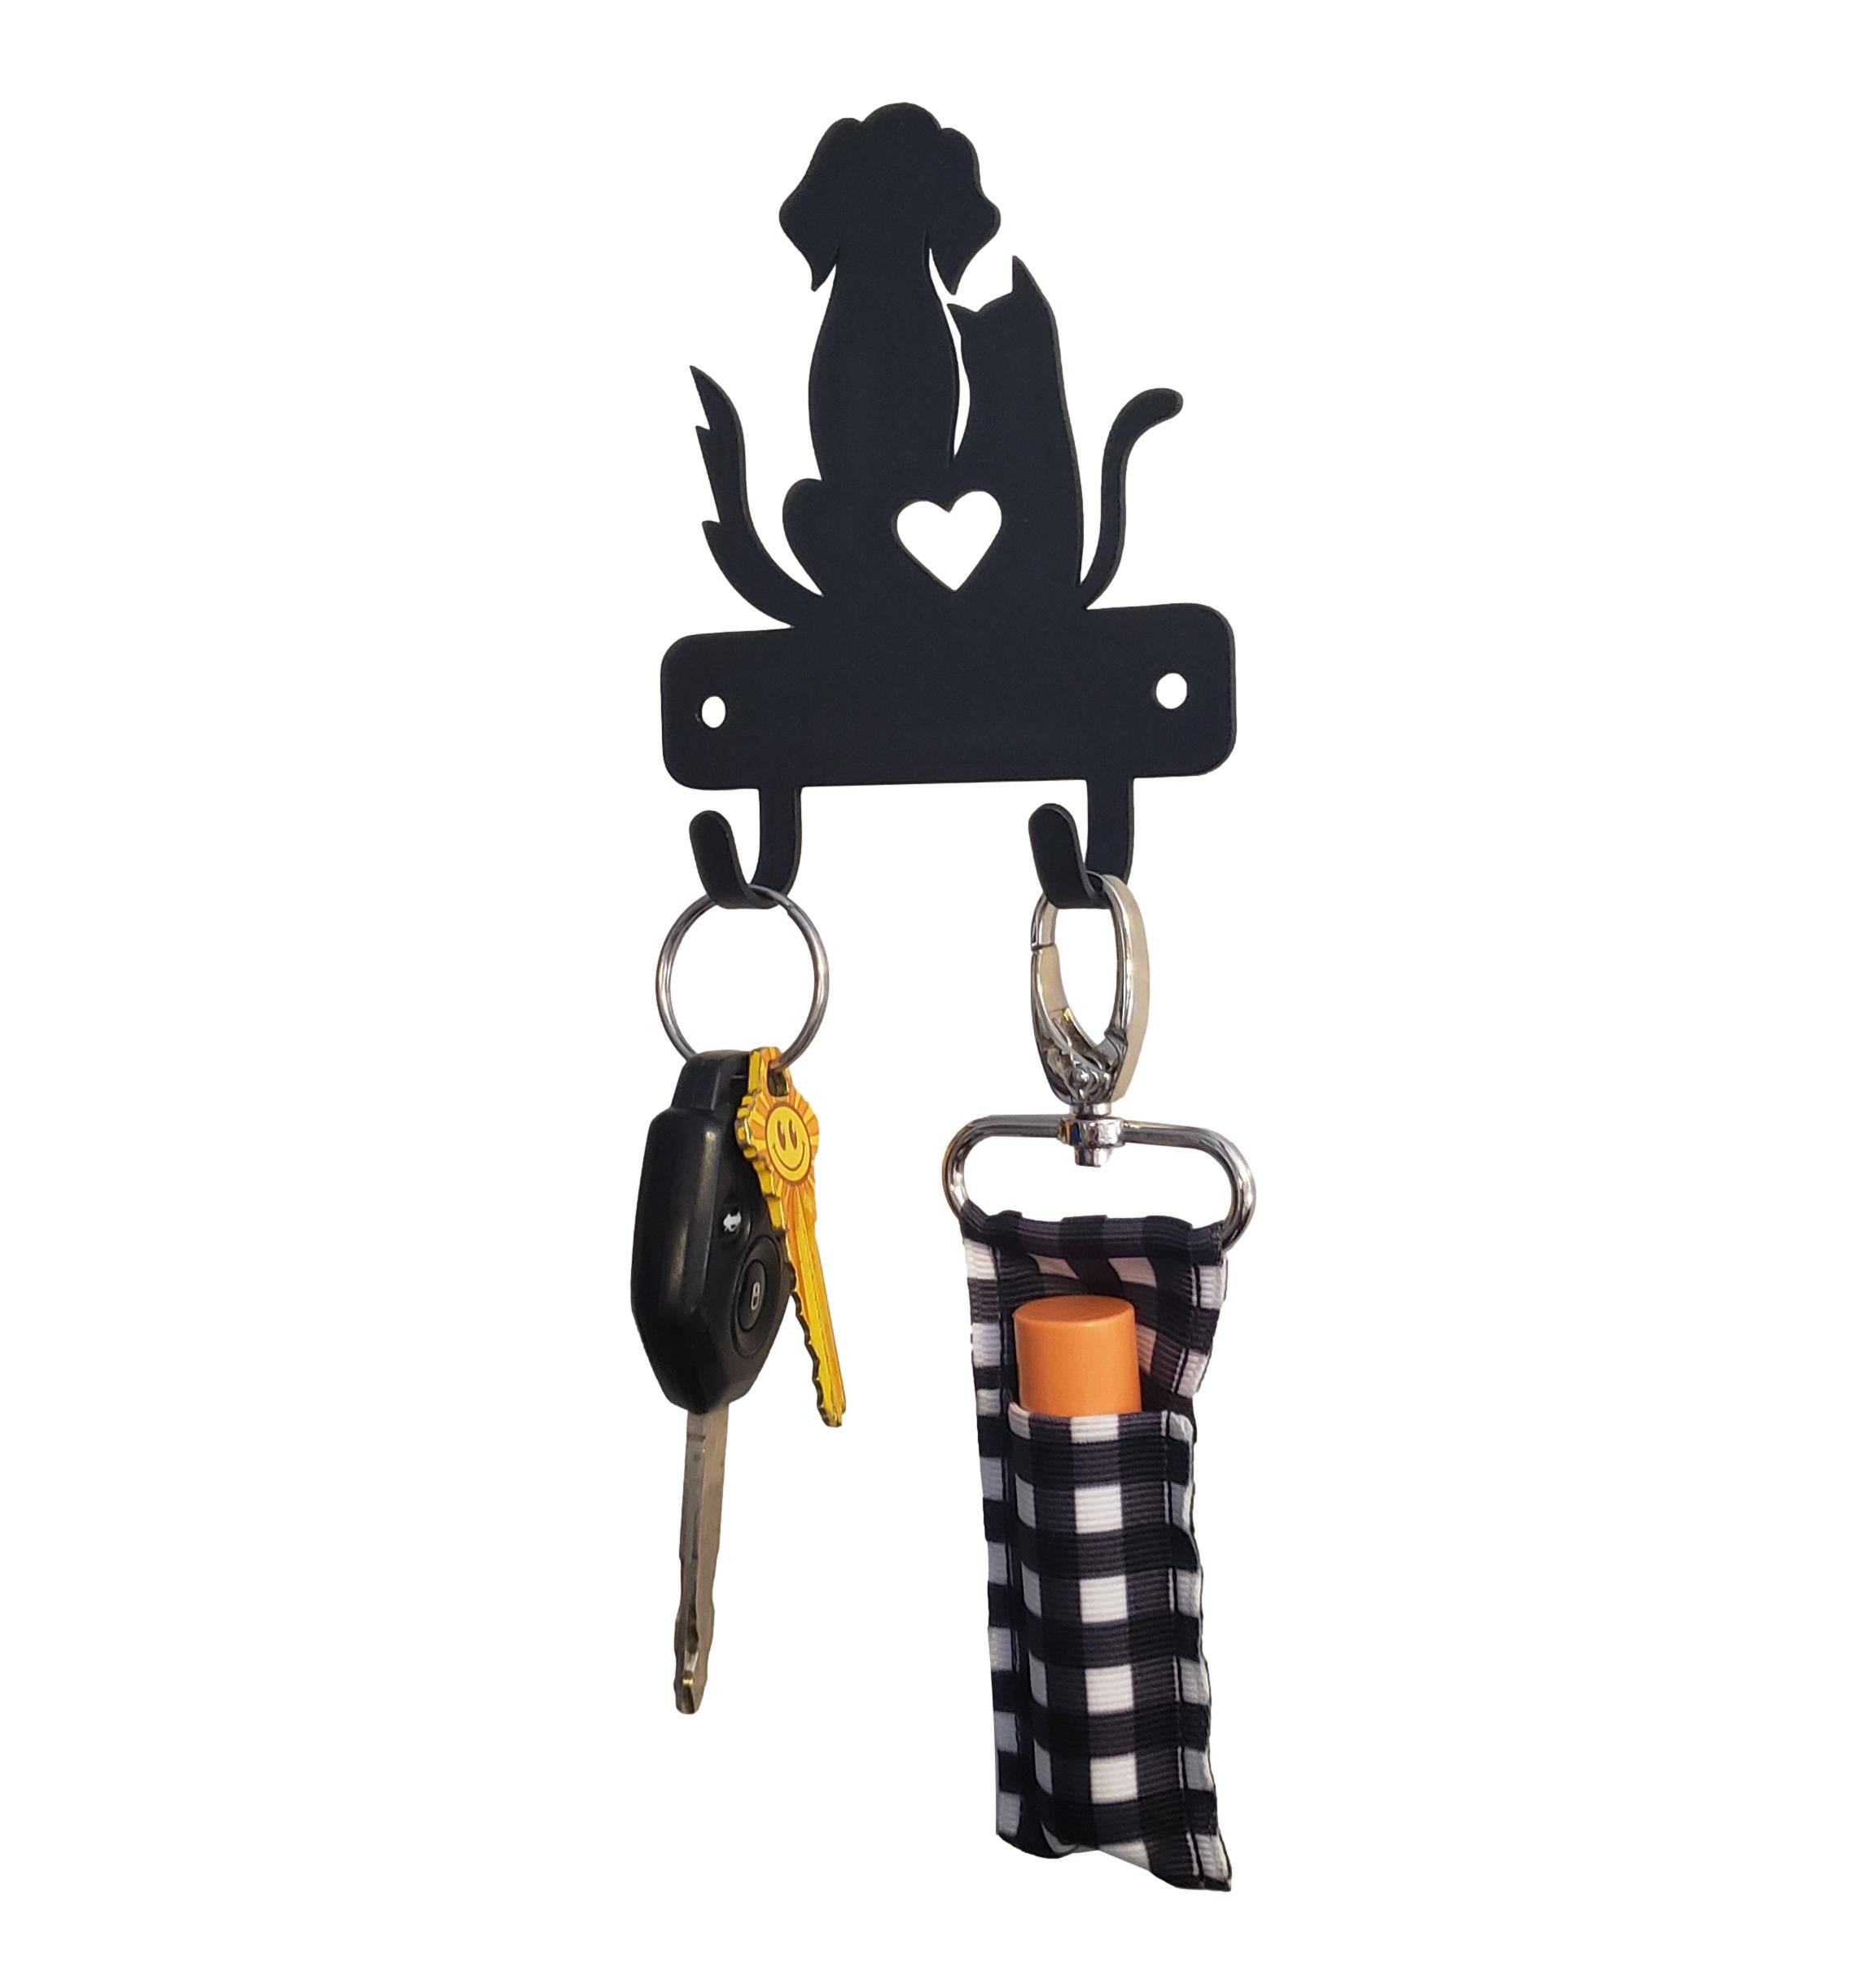 Dog and Cat ❤️ Love Mini Key Rack with 2 hooks - The Metal Peddler Key Rack Cat, dog, key rack, mini kr